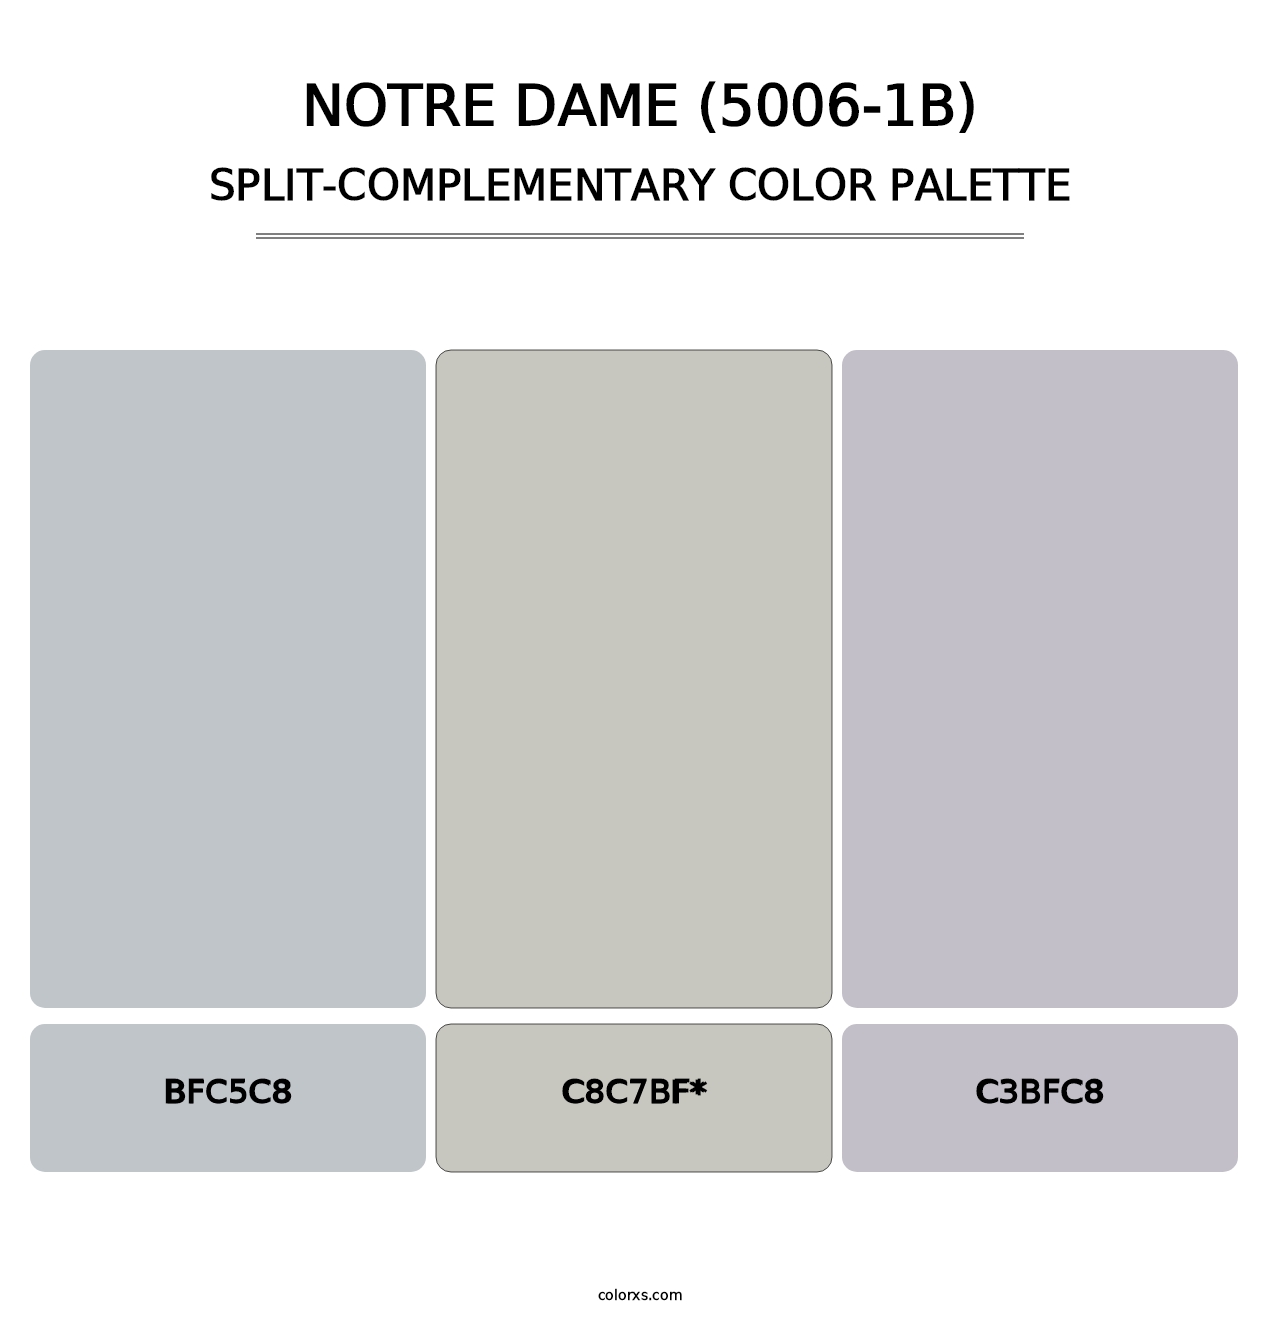 Notre Dame (5006-1B) - Split-Complementary Color Palette